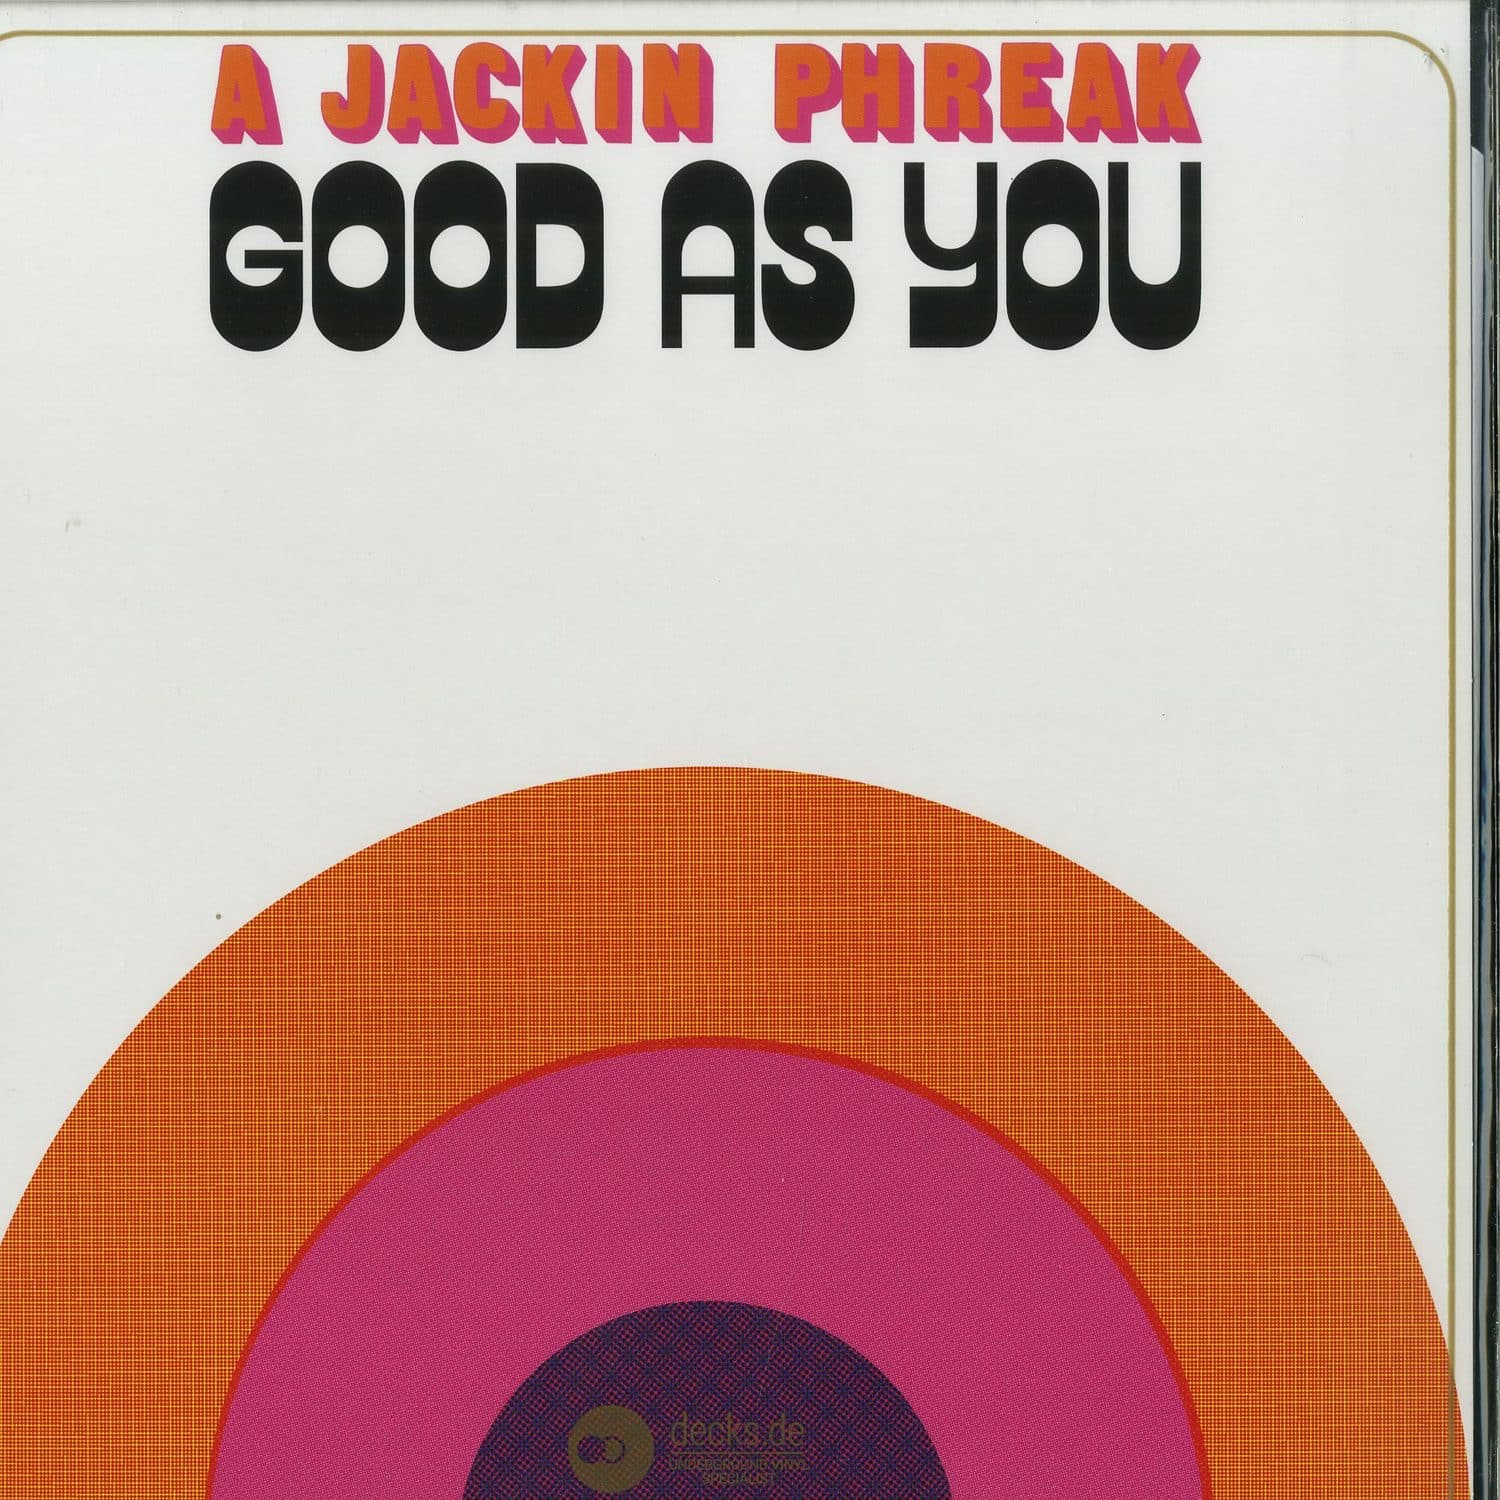 A Jackin Phreak - GOOD AS YOU EP